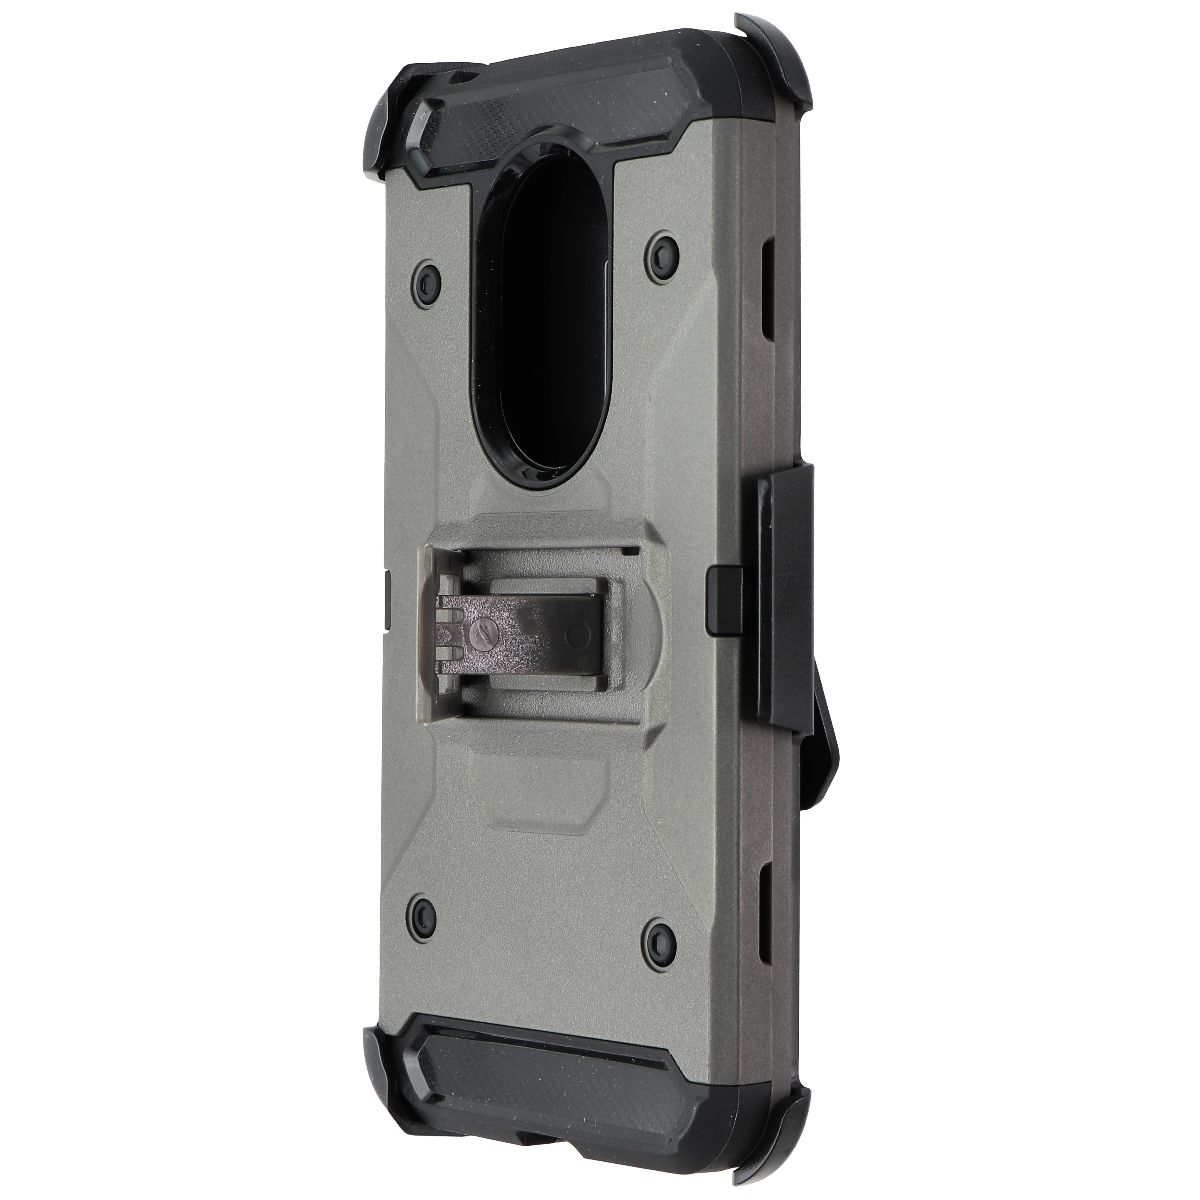 MyBat 3-in-1 Kinetic Hybrid Case For Motorola Moto G7 Power - Gray/Black (Refurbished)